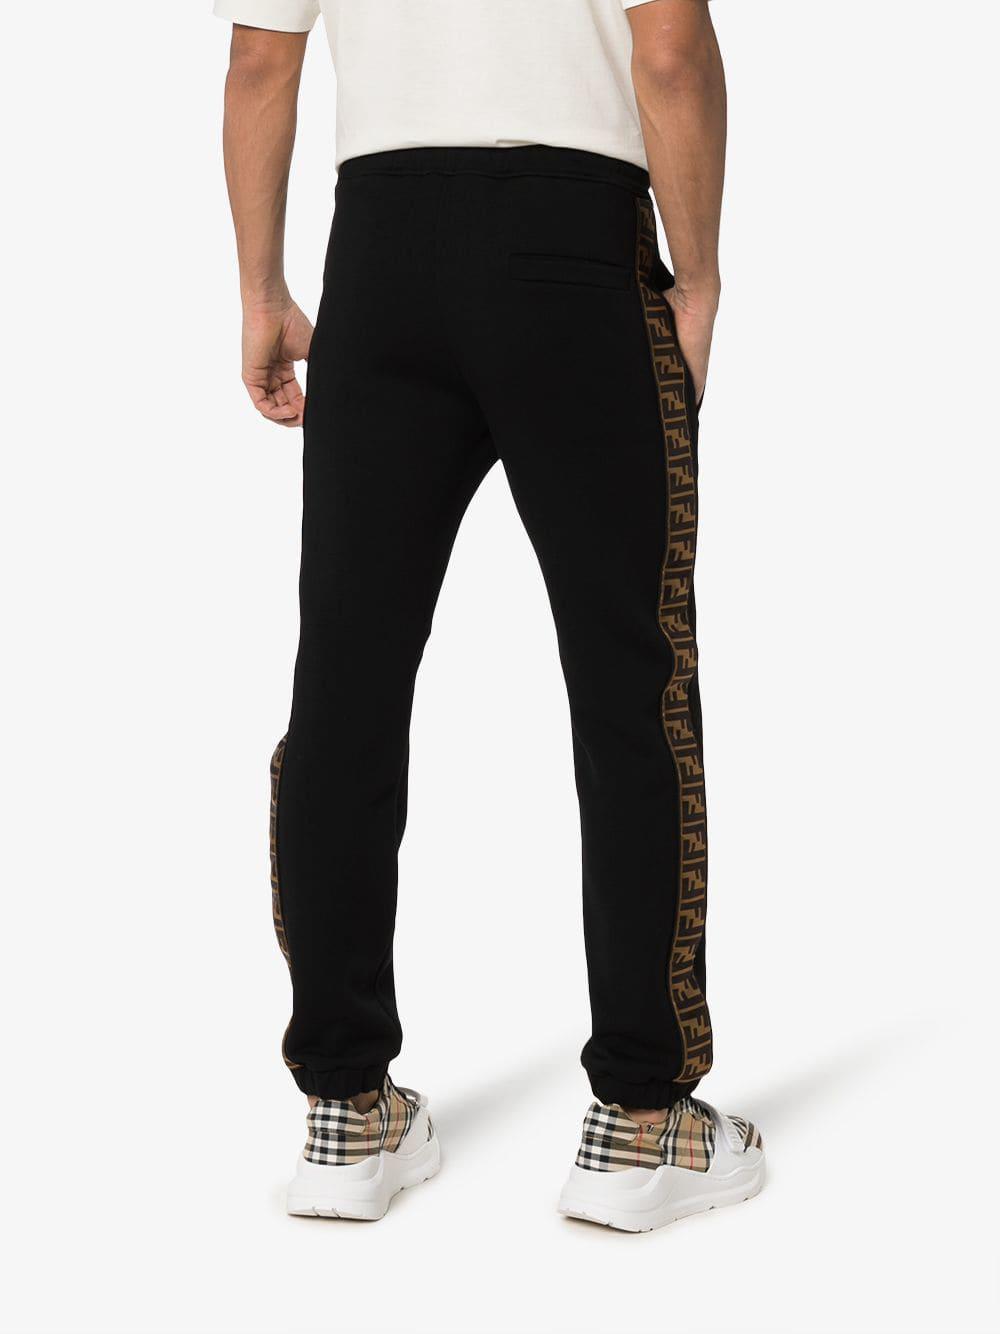 Fendi Logo Stripe Cashmere-blend Sweatpants in Black for Men - Lyst